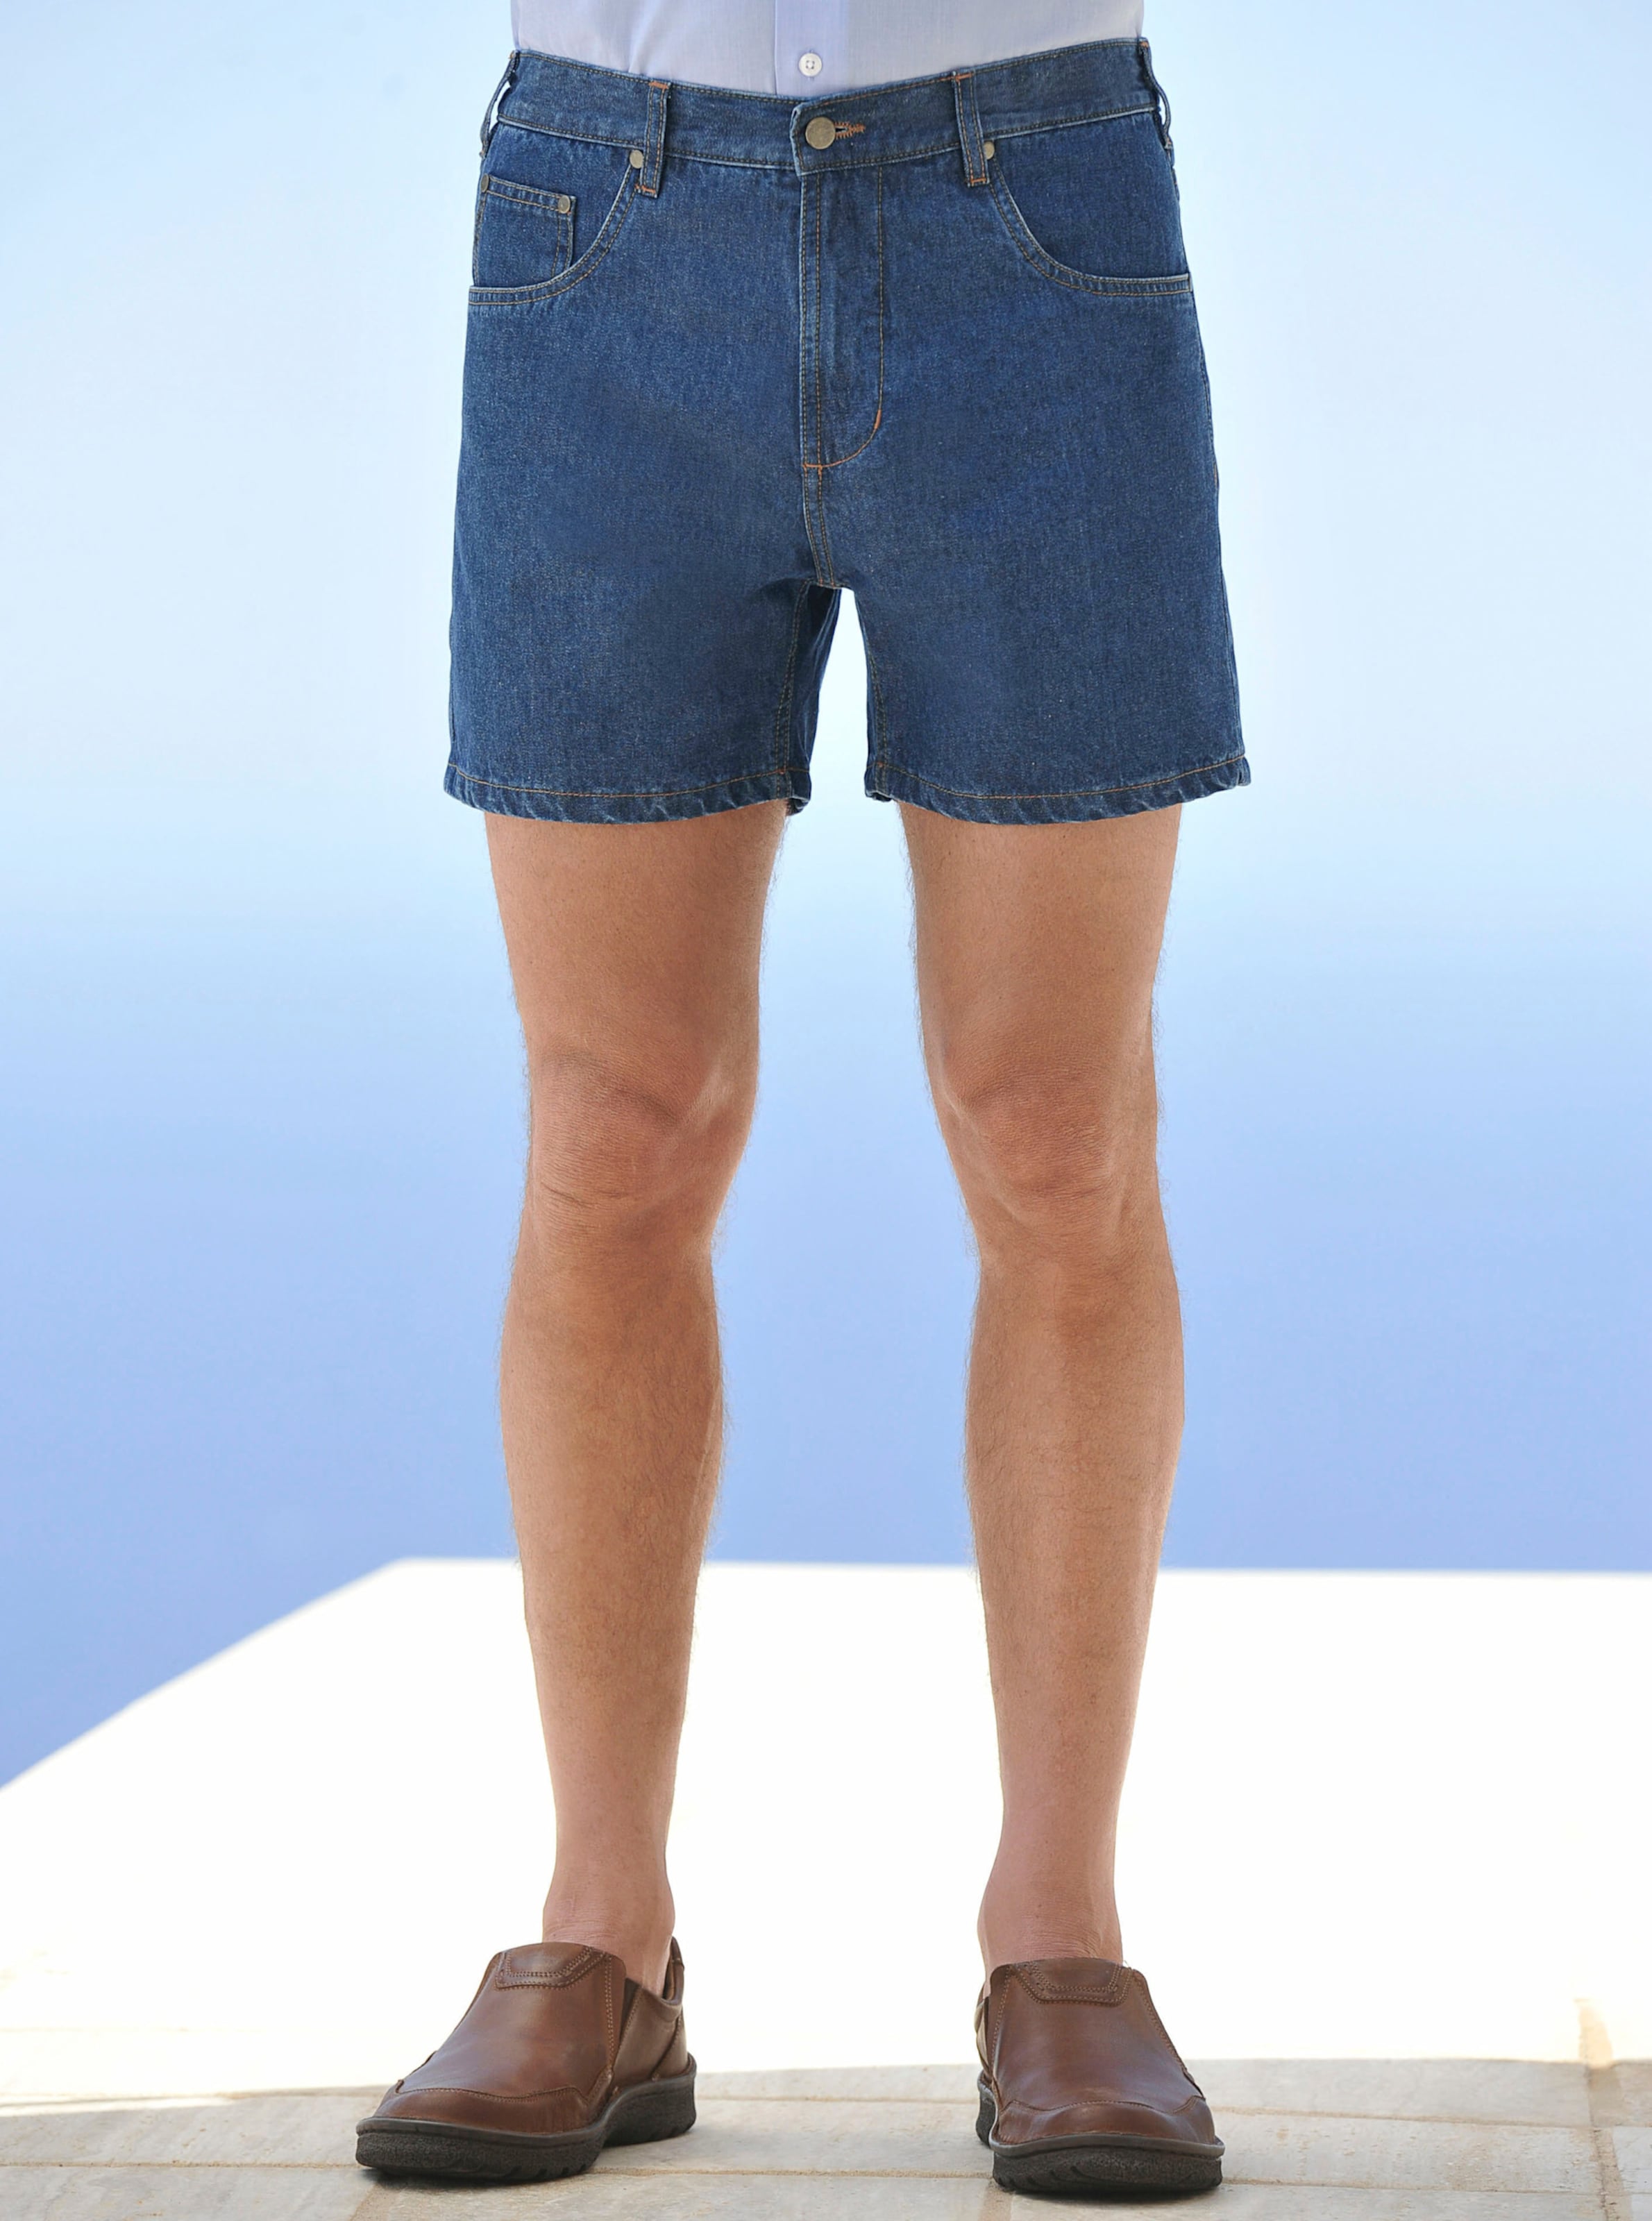 Witt Herren Jeans-Shorts, blue-stone-washed